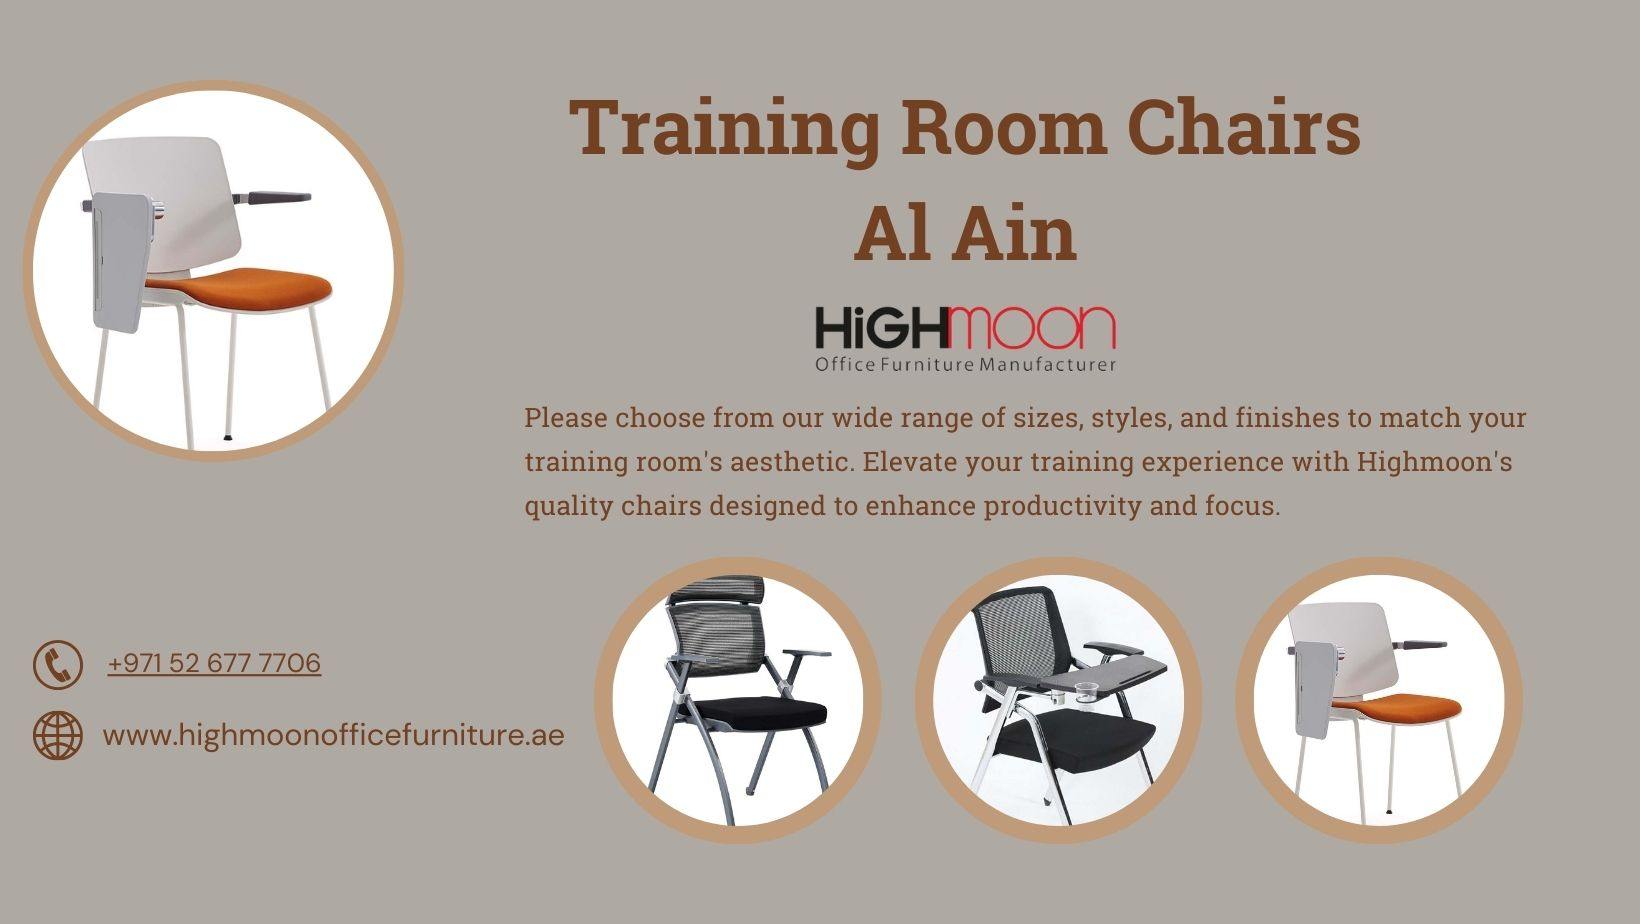 Training Room Chairs Al Ain